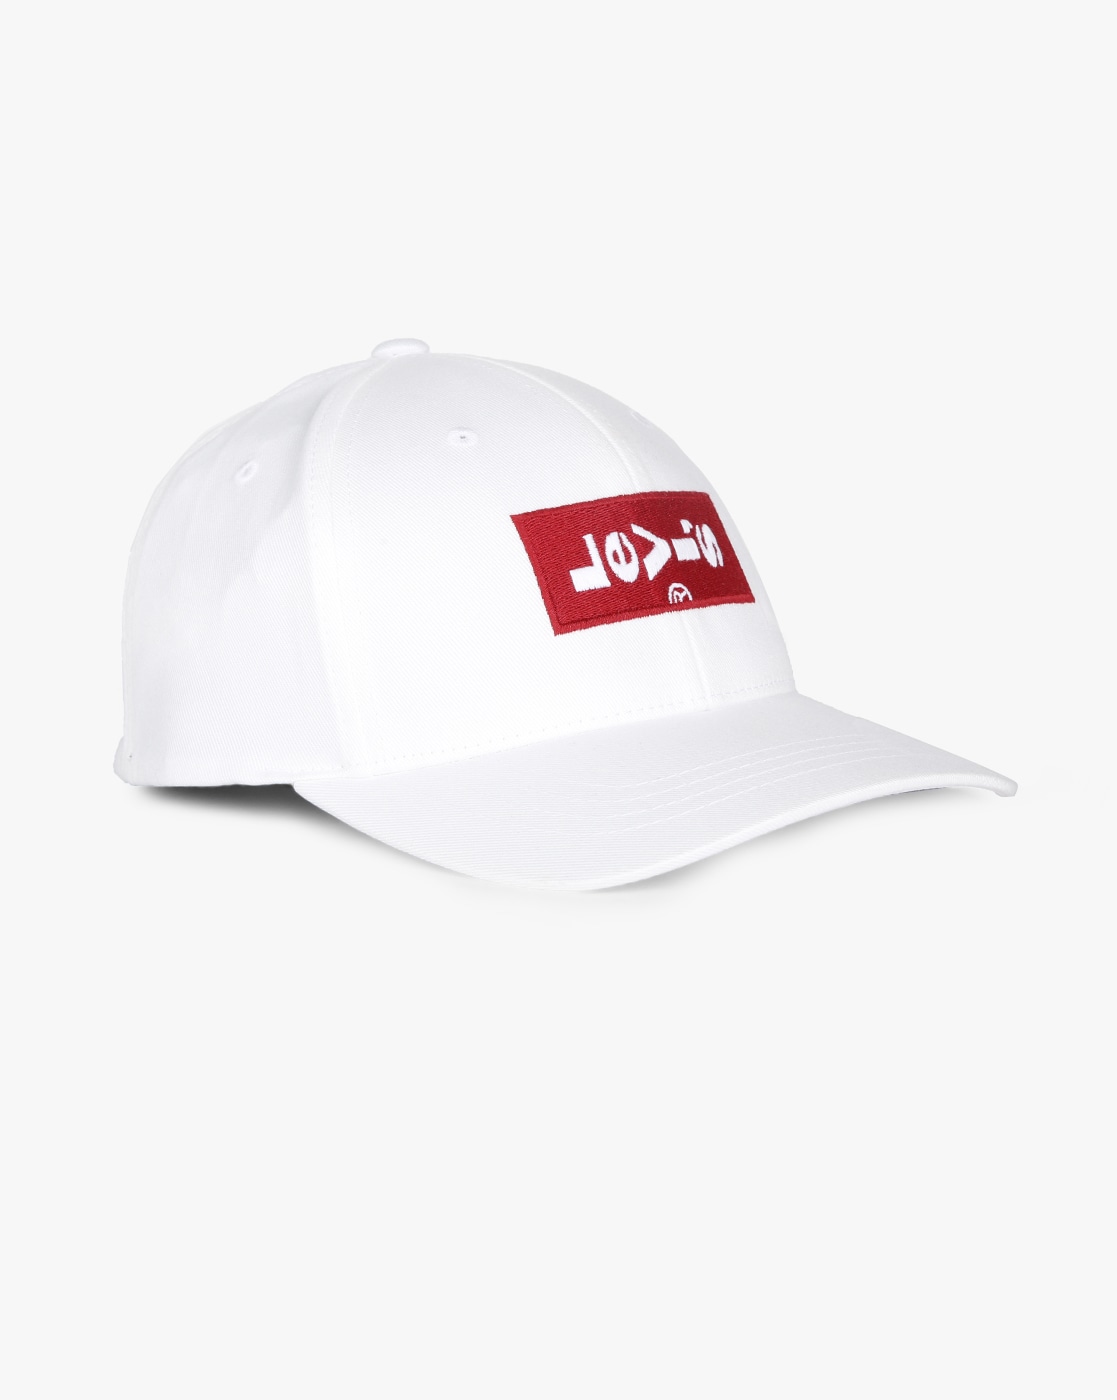 Buy White Caps \u0026 Hats for Men by LEVIS 